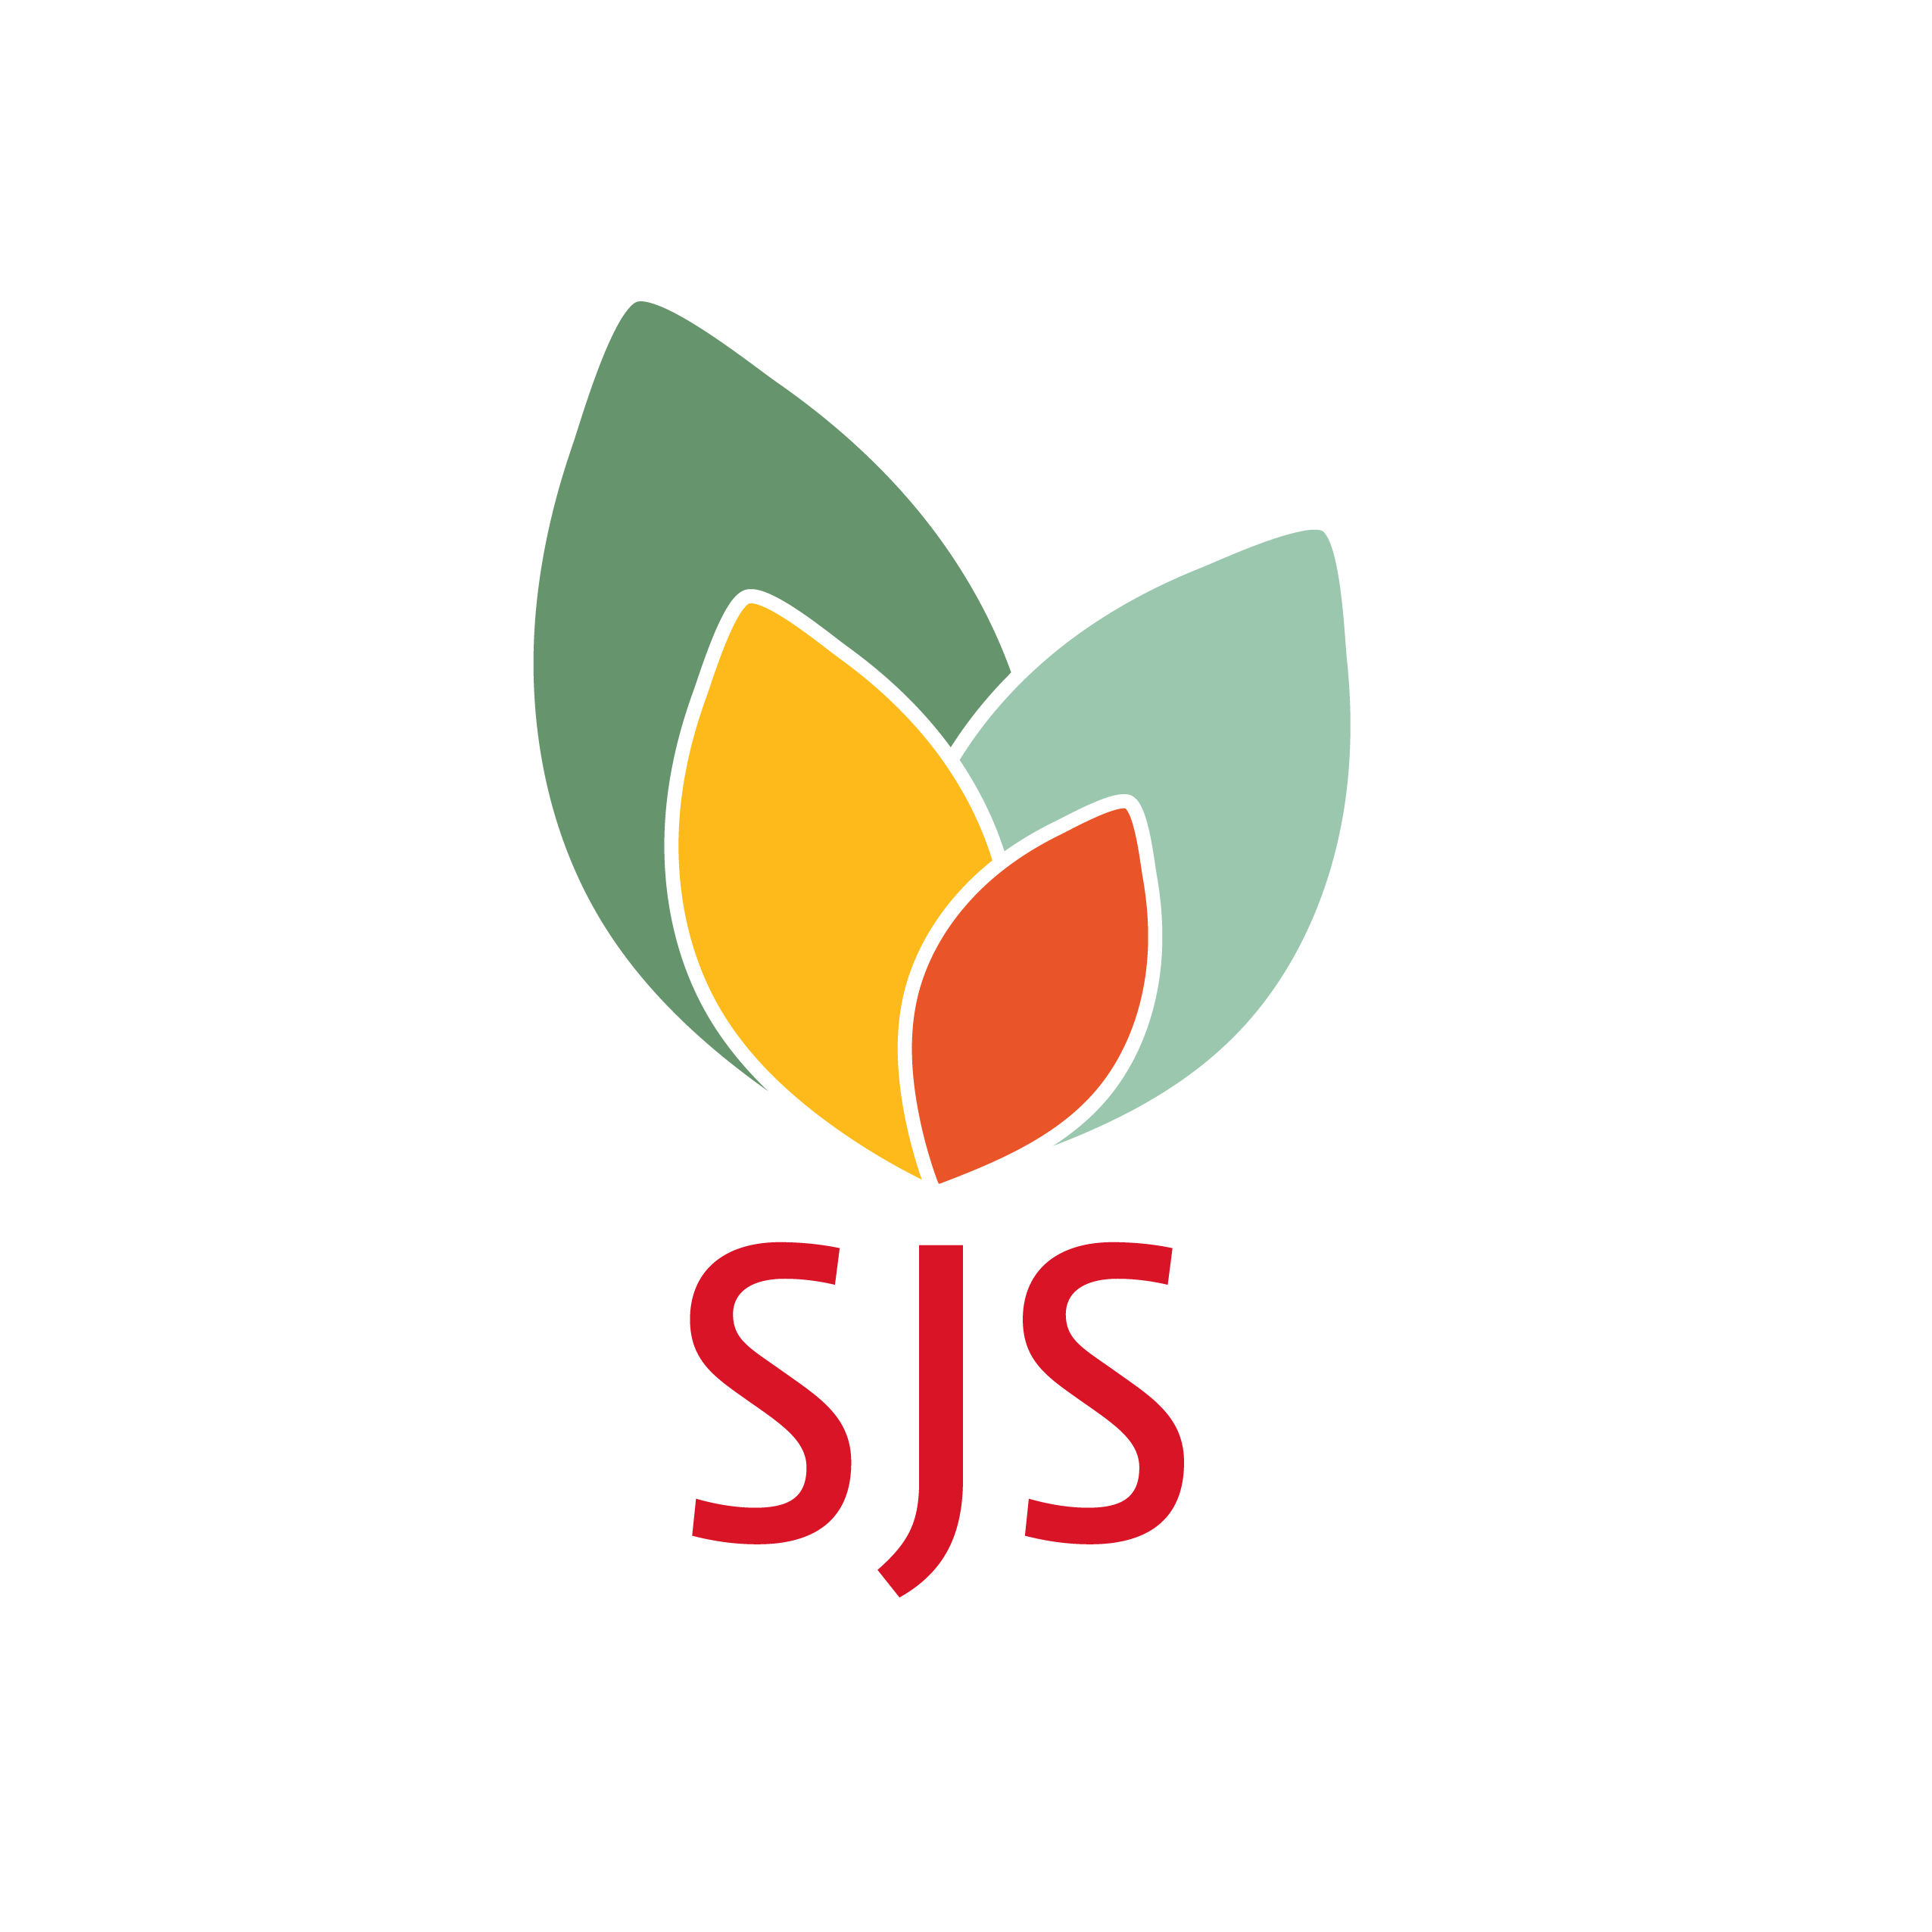 SJS スイス−日本サステナビリティ交流会